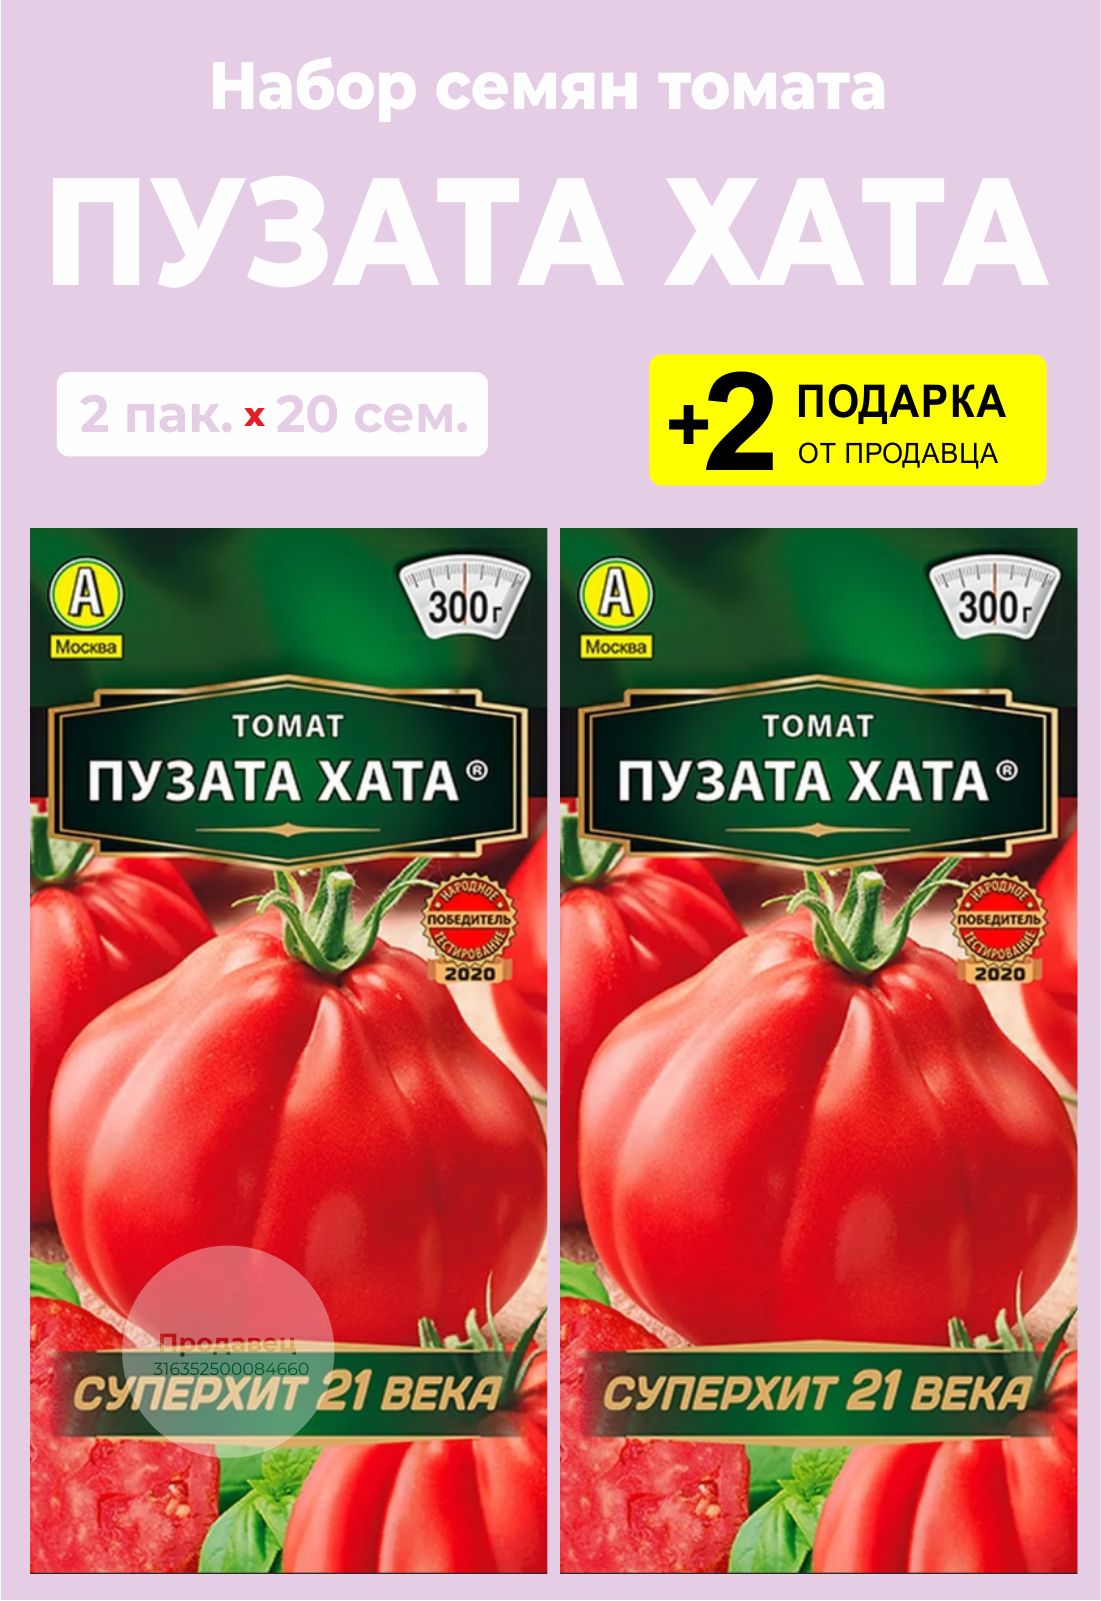 В каких регионах хорошо растет томат Пузата хата?